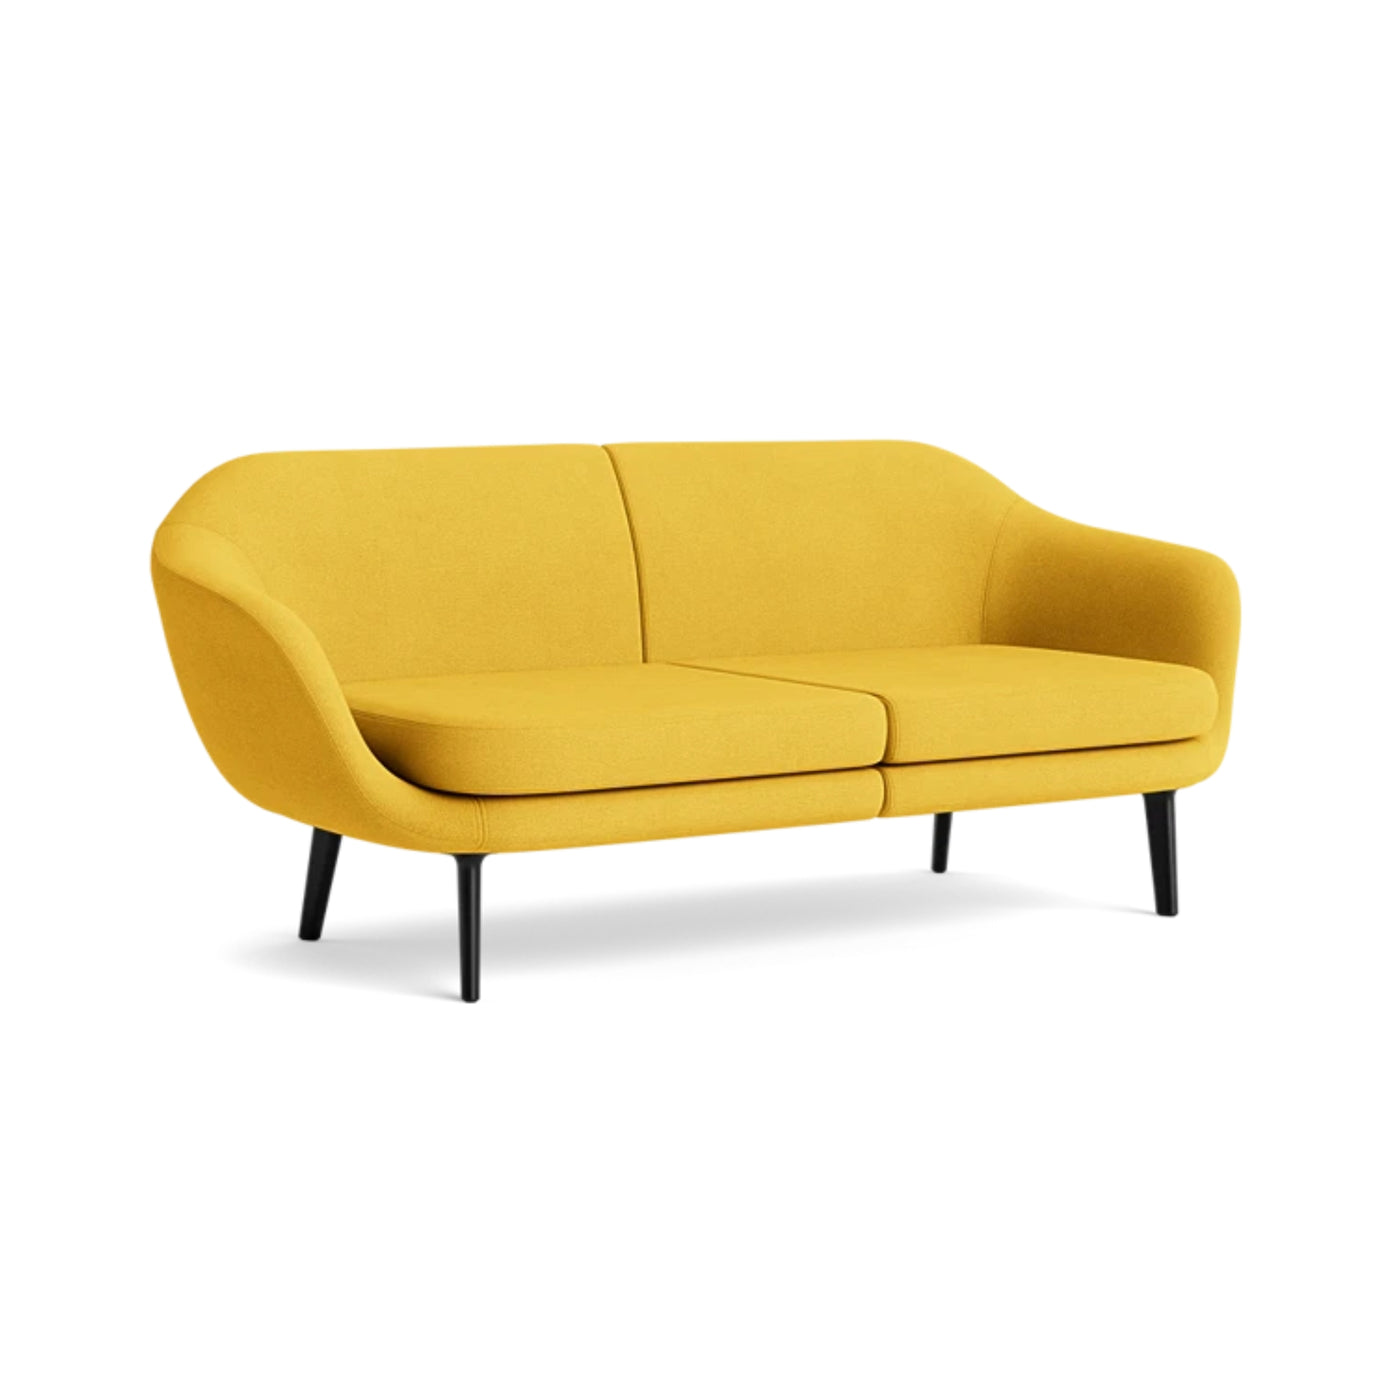 Normann Copenhagen Sum Modular 2 Seater Sofa. Made to order from someday designs. #colour_hallingdal-457